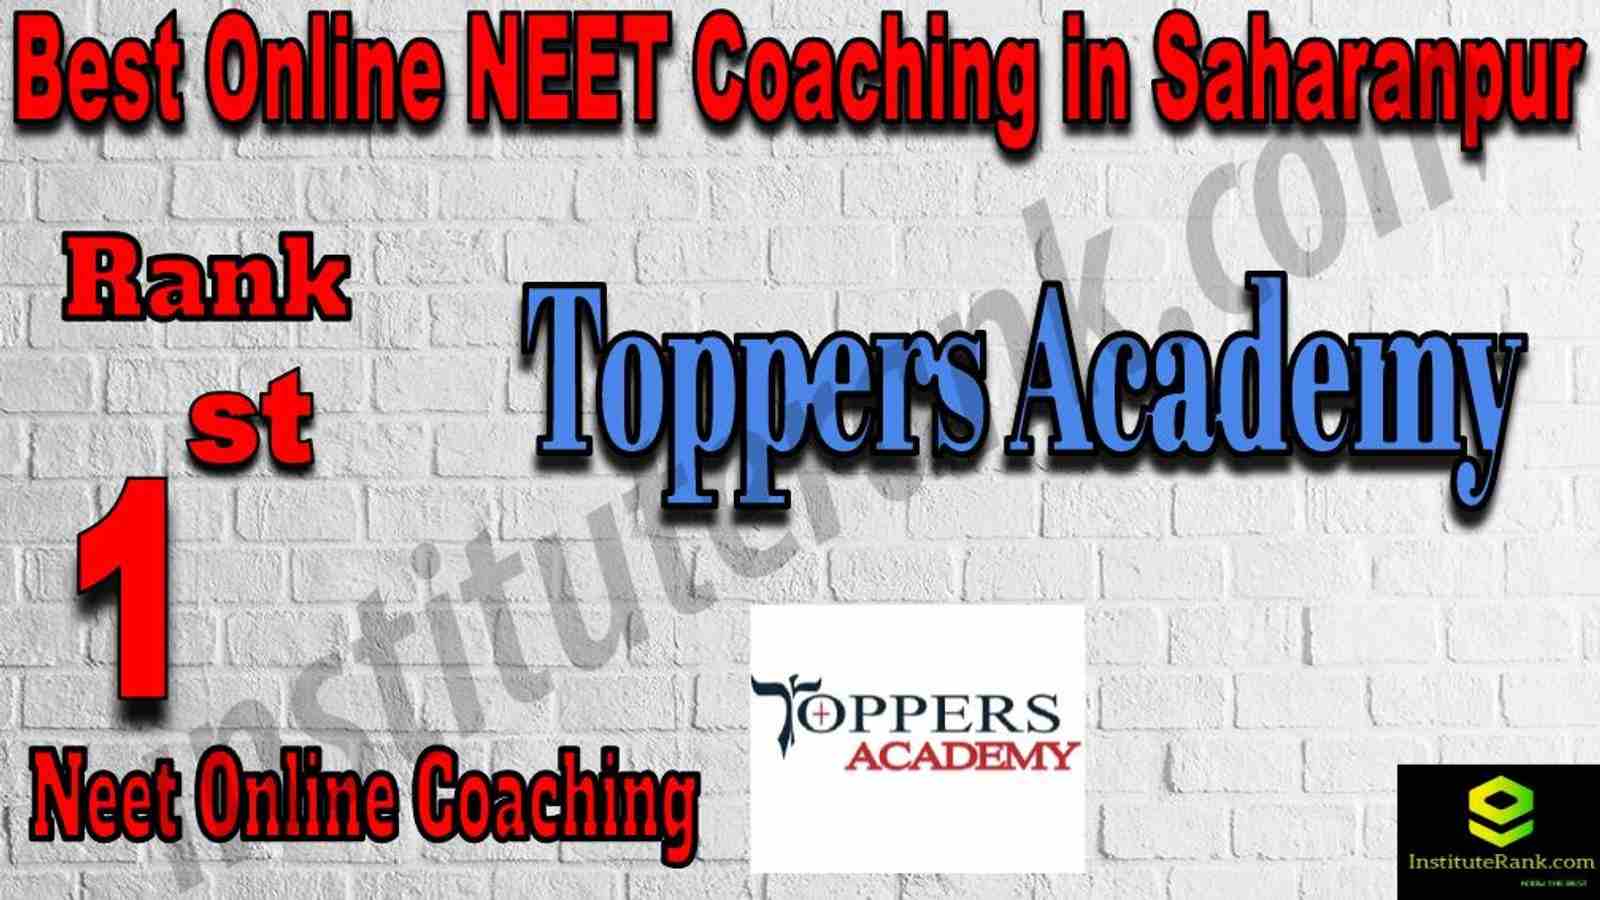 1st Best Online Neet Coaching in Saharanpur